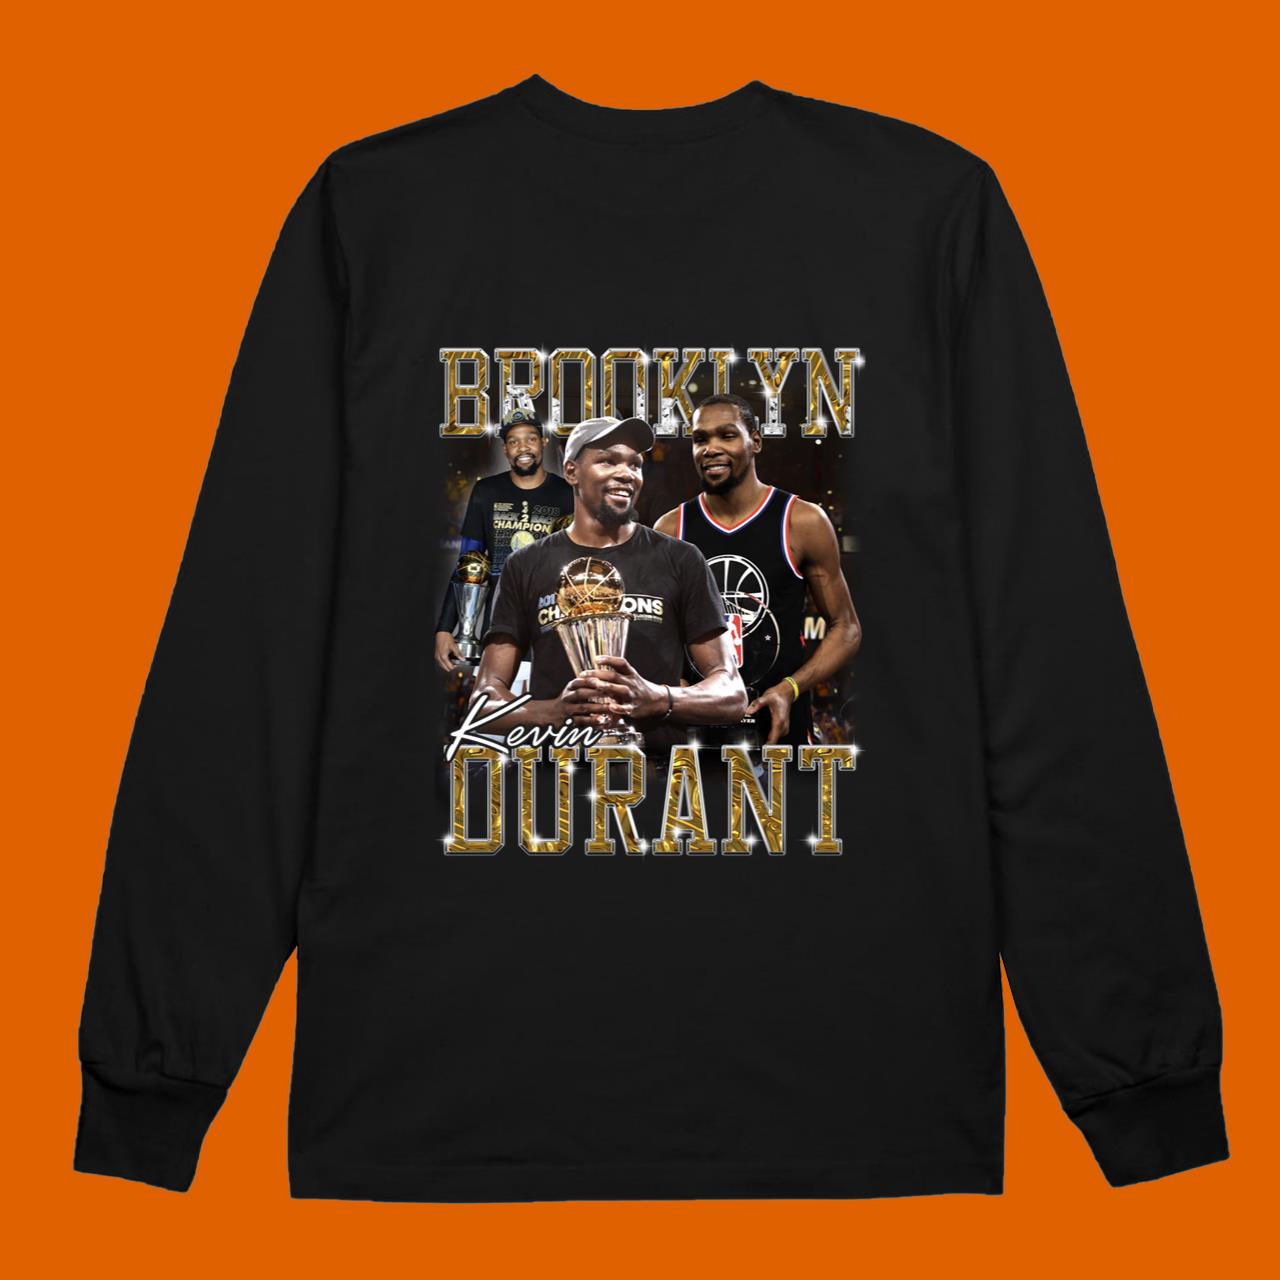 Kevin Durant Basketball Legend Signature Vintage Retro 80s 90s Bootleg Rap Style Classic T-Shirt